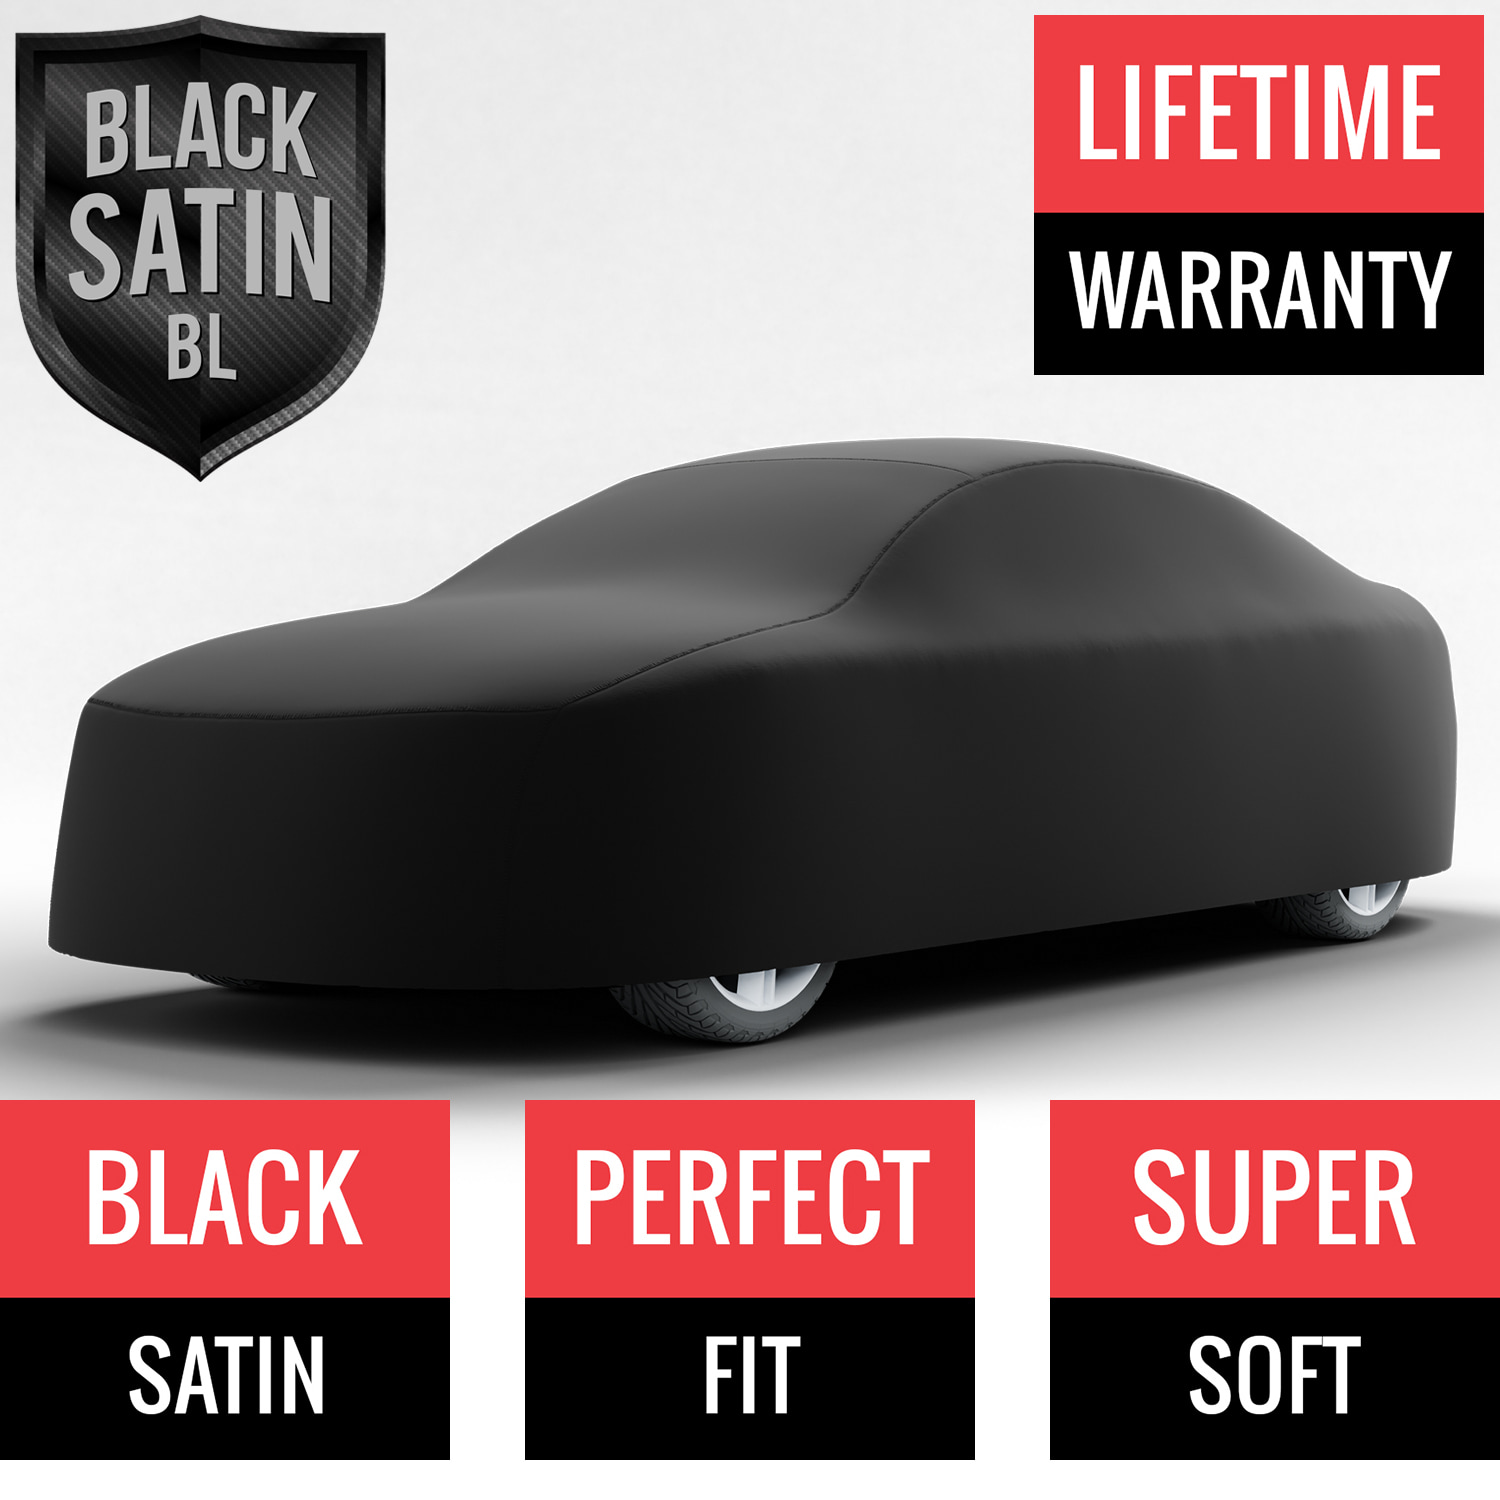 Black Satin BL - Black Car Cover for Pontiac Firebird Trans Am 1997 Convertible 2-Door